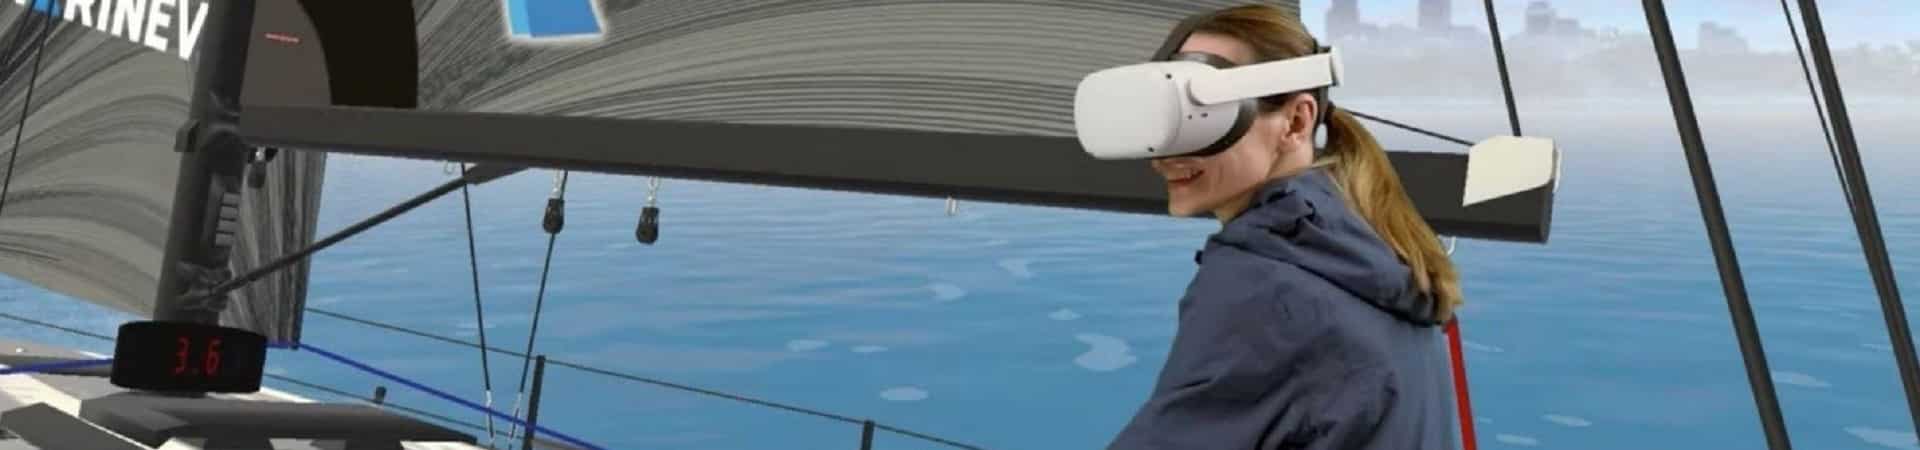 Virtual Reality Sailing Course